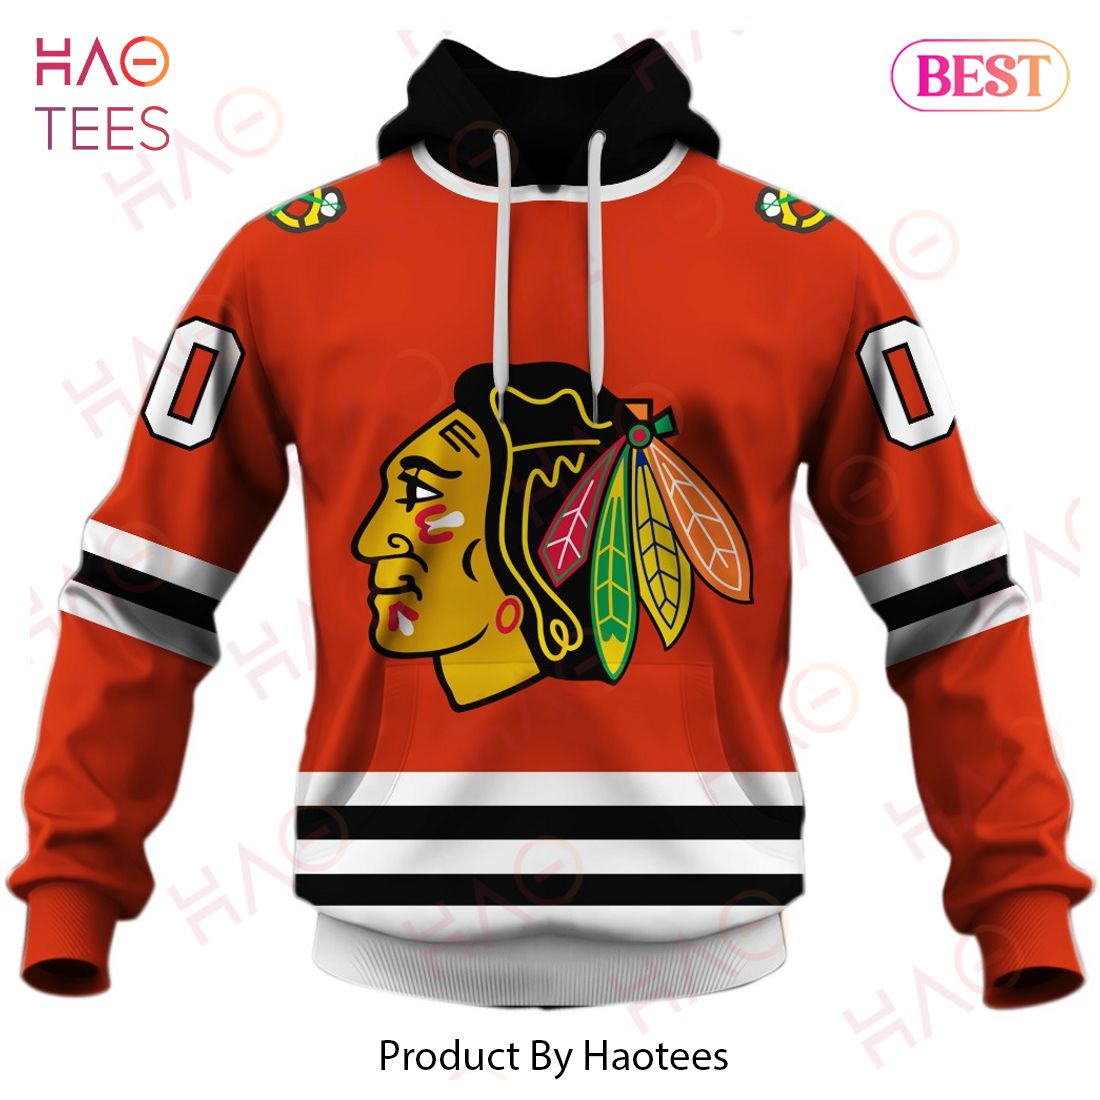 NHL Chicago Blackhawks Mix Jersey Custom Personalized Hoodie T